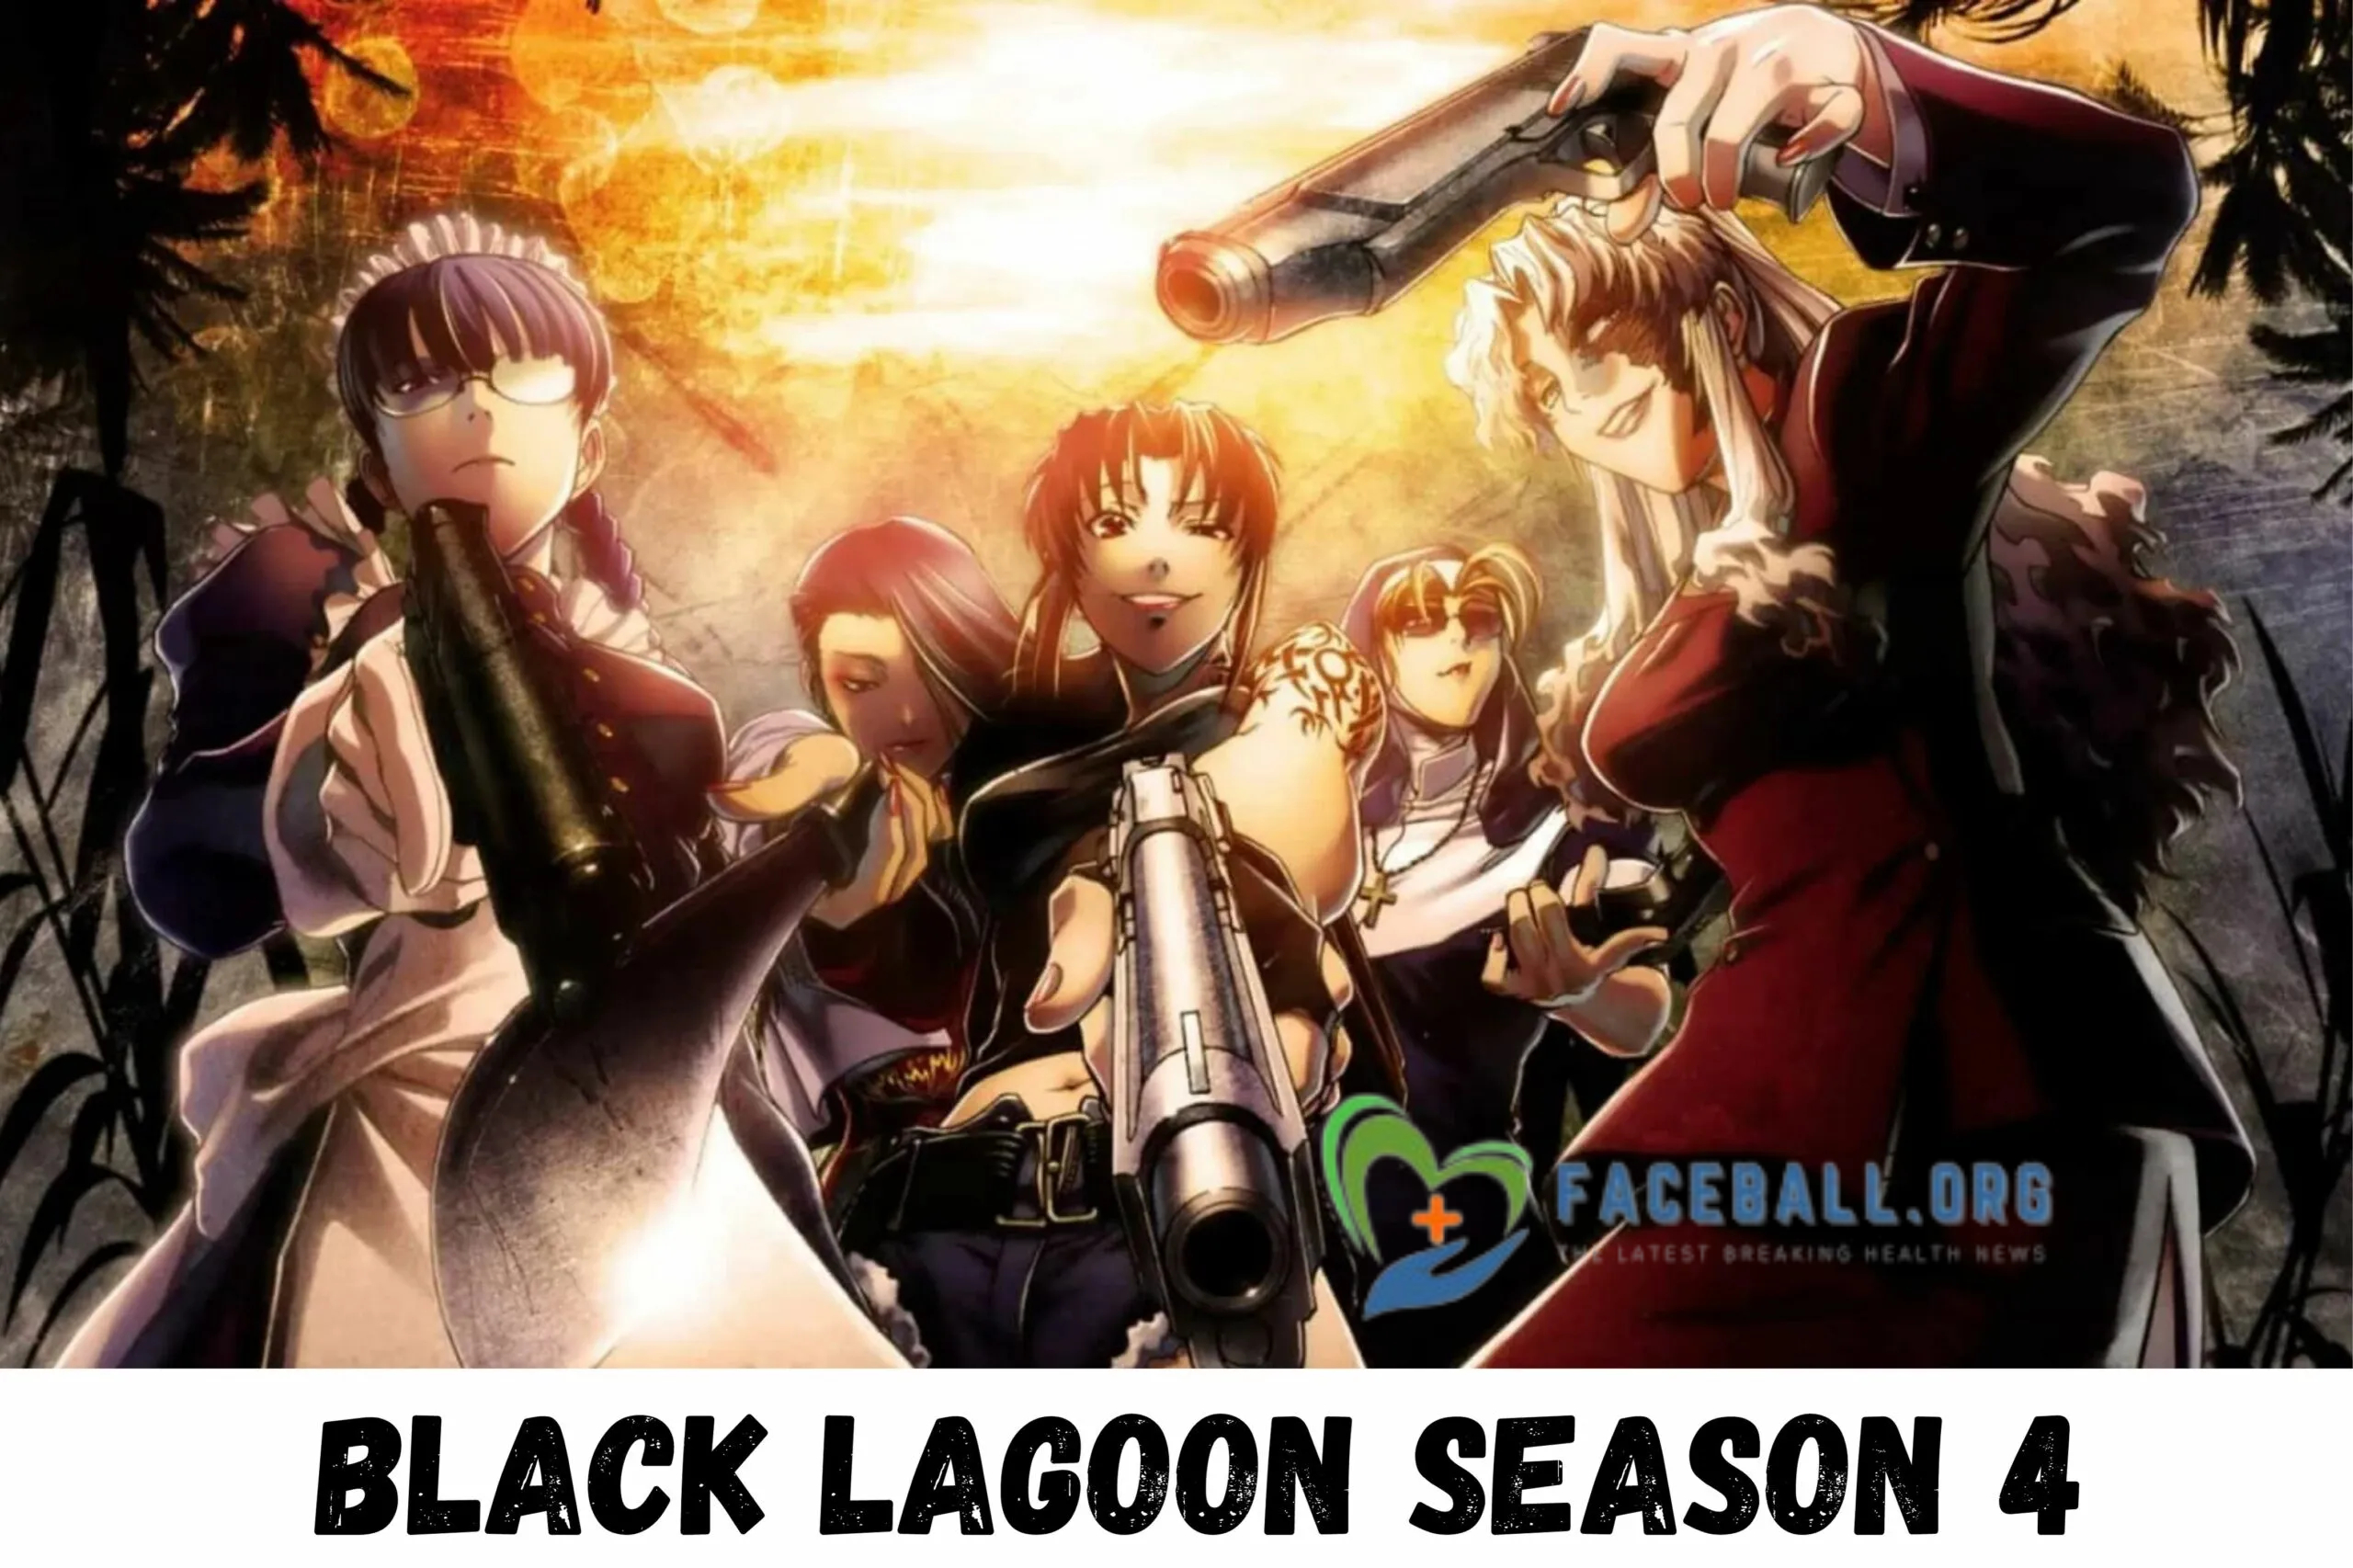 The Black Lagoon Season 4